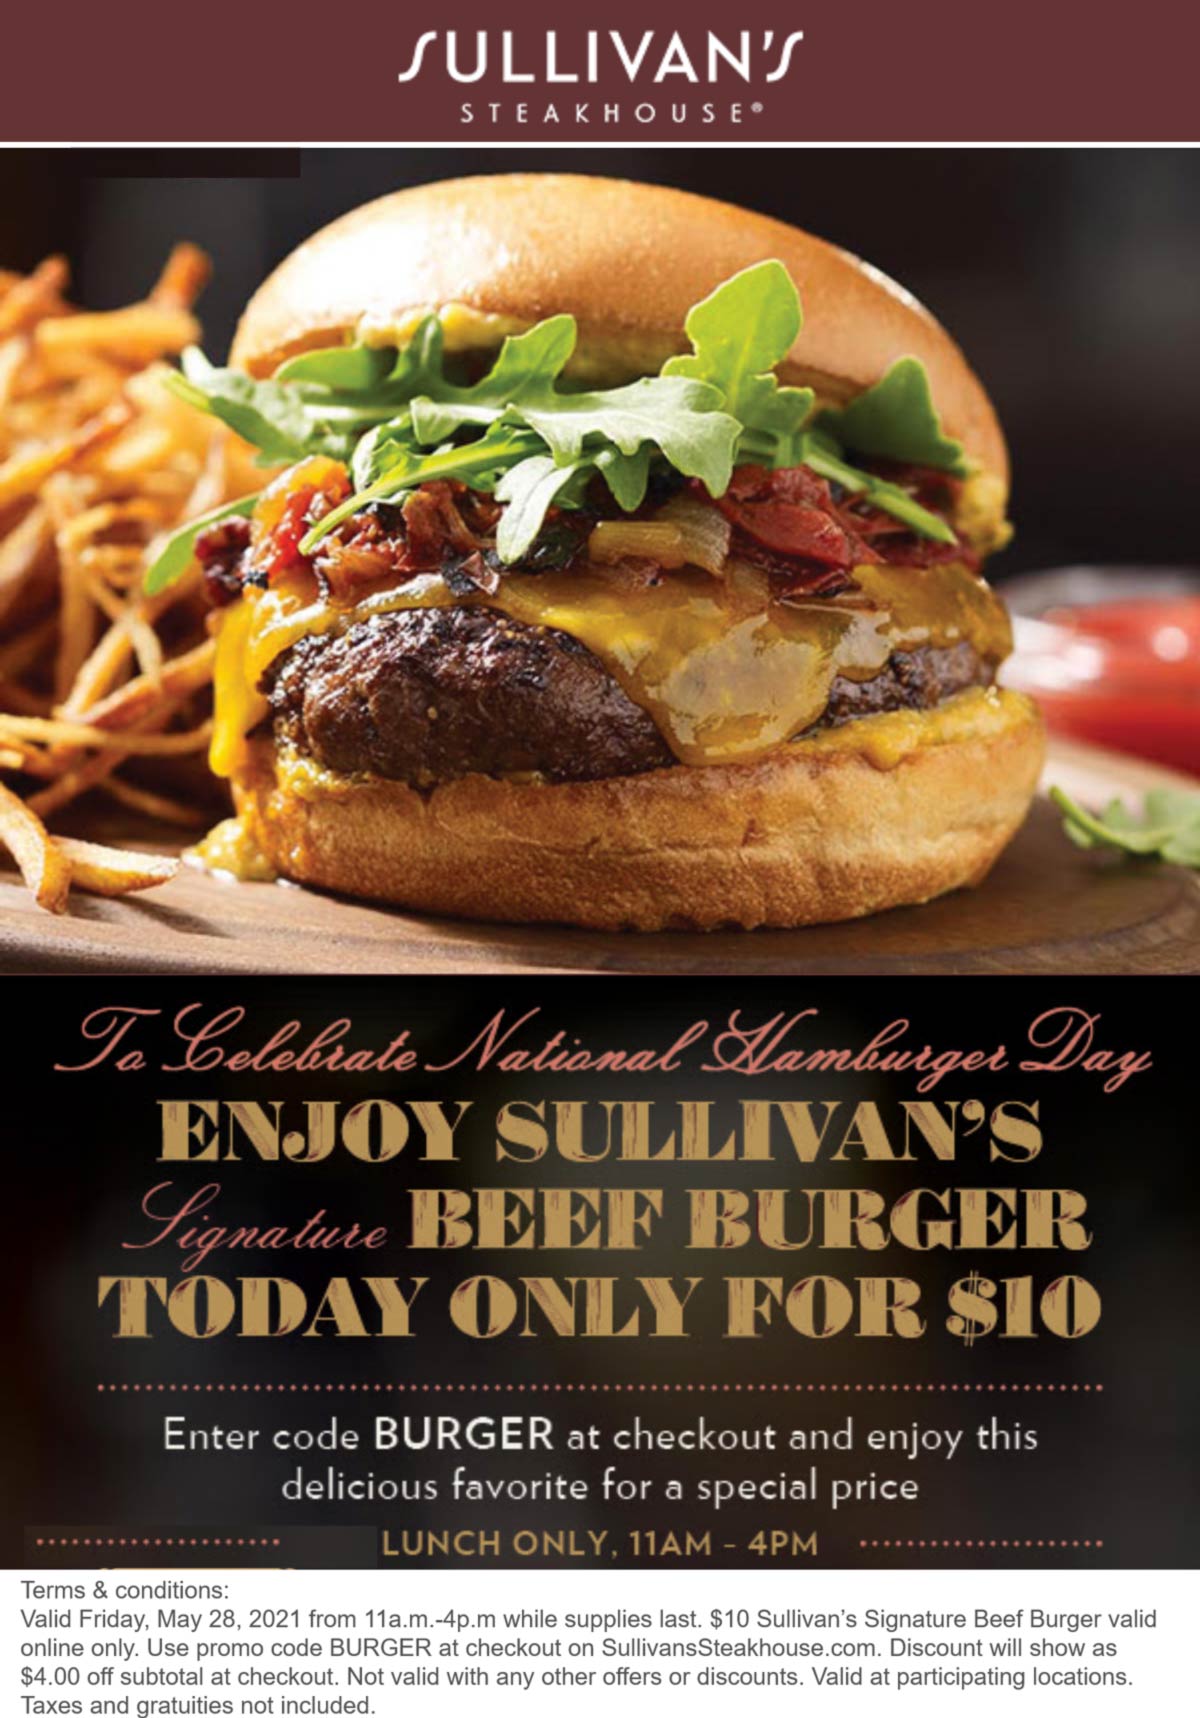 Sullivans Steakhouse restaurants Coupon  $10 signature beef burger 11-4p today at Sullivans Steakhouse via promo code BURGER #sullivanssteakhouse 